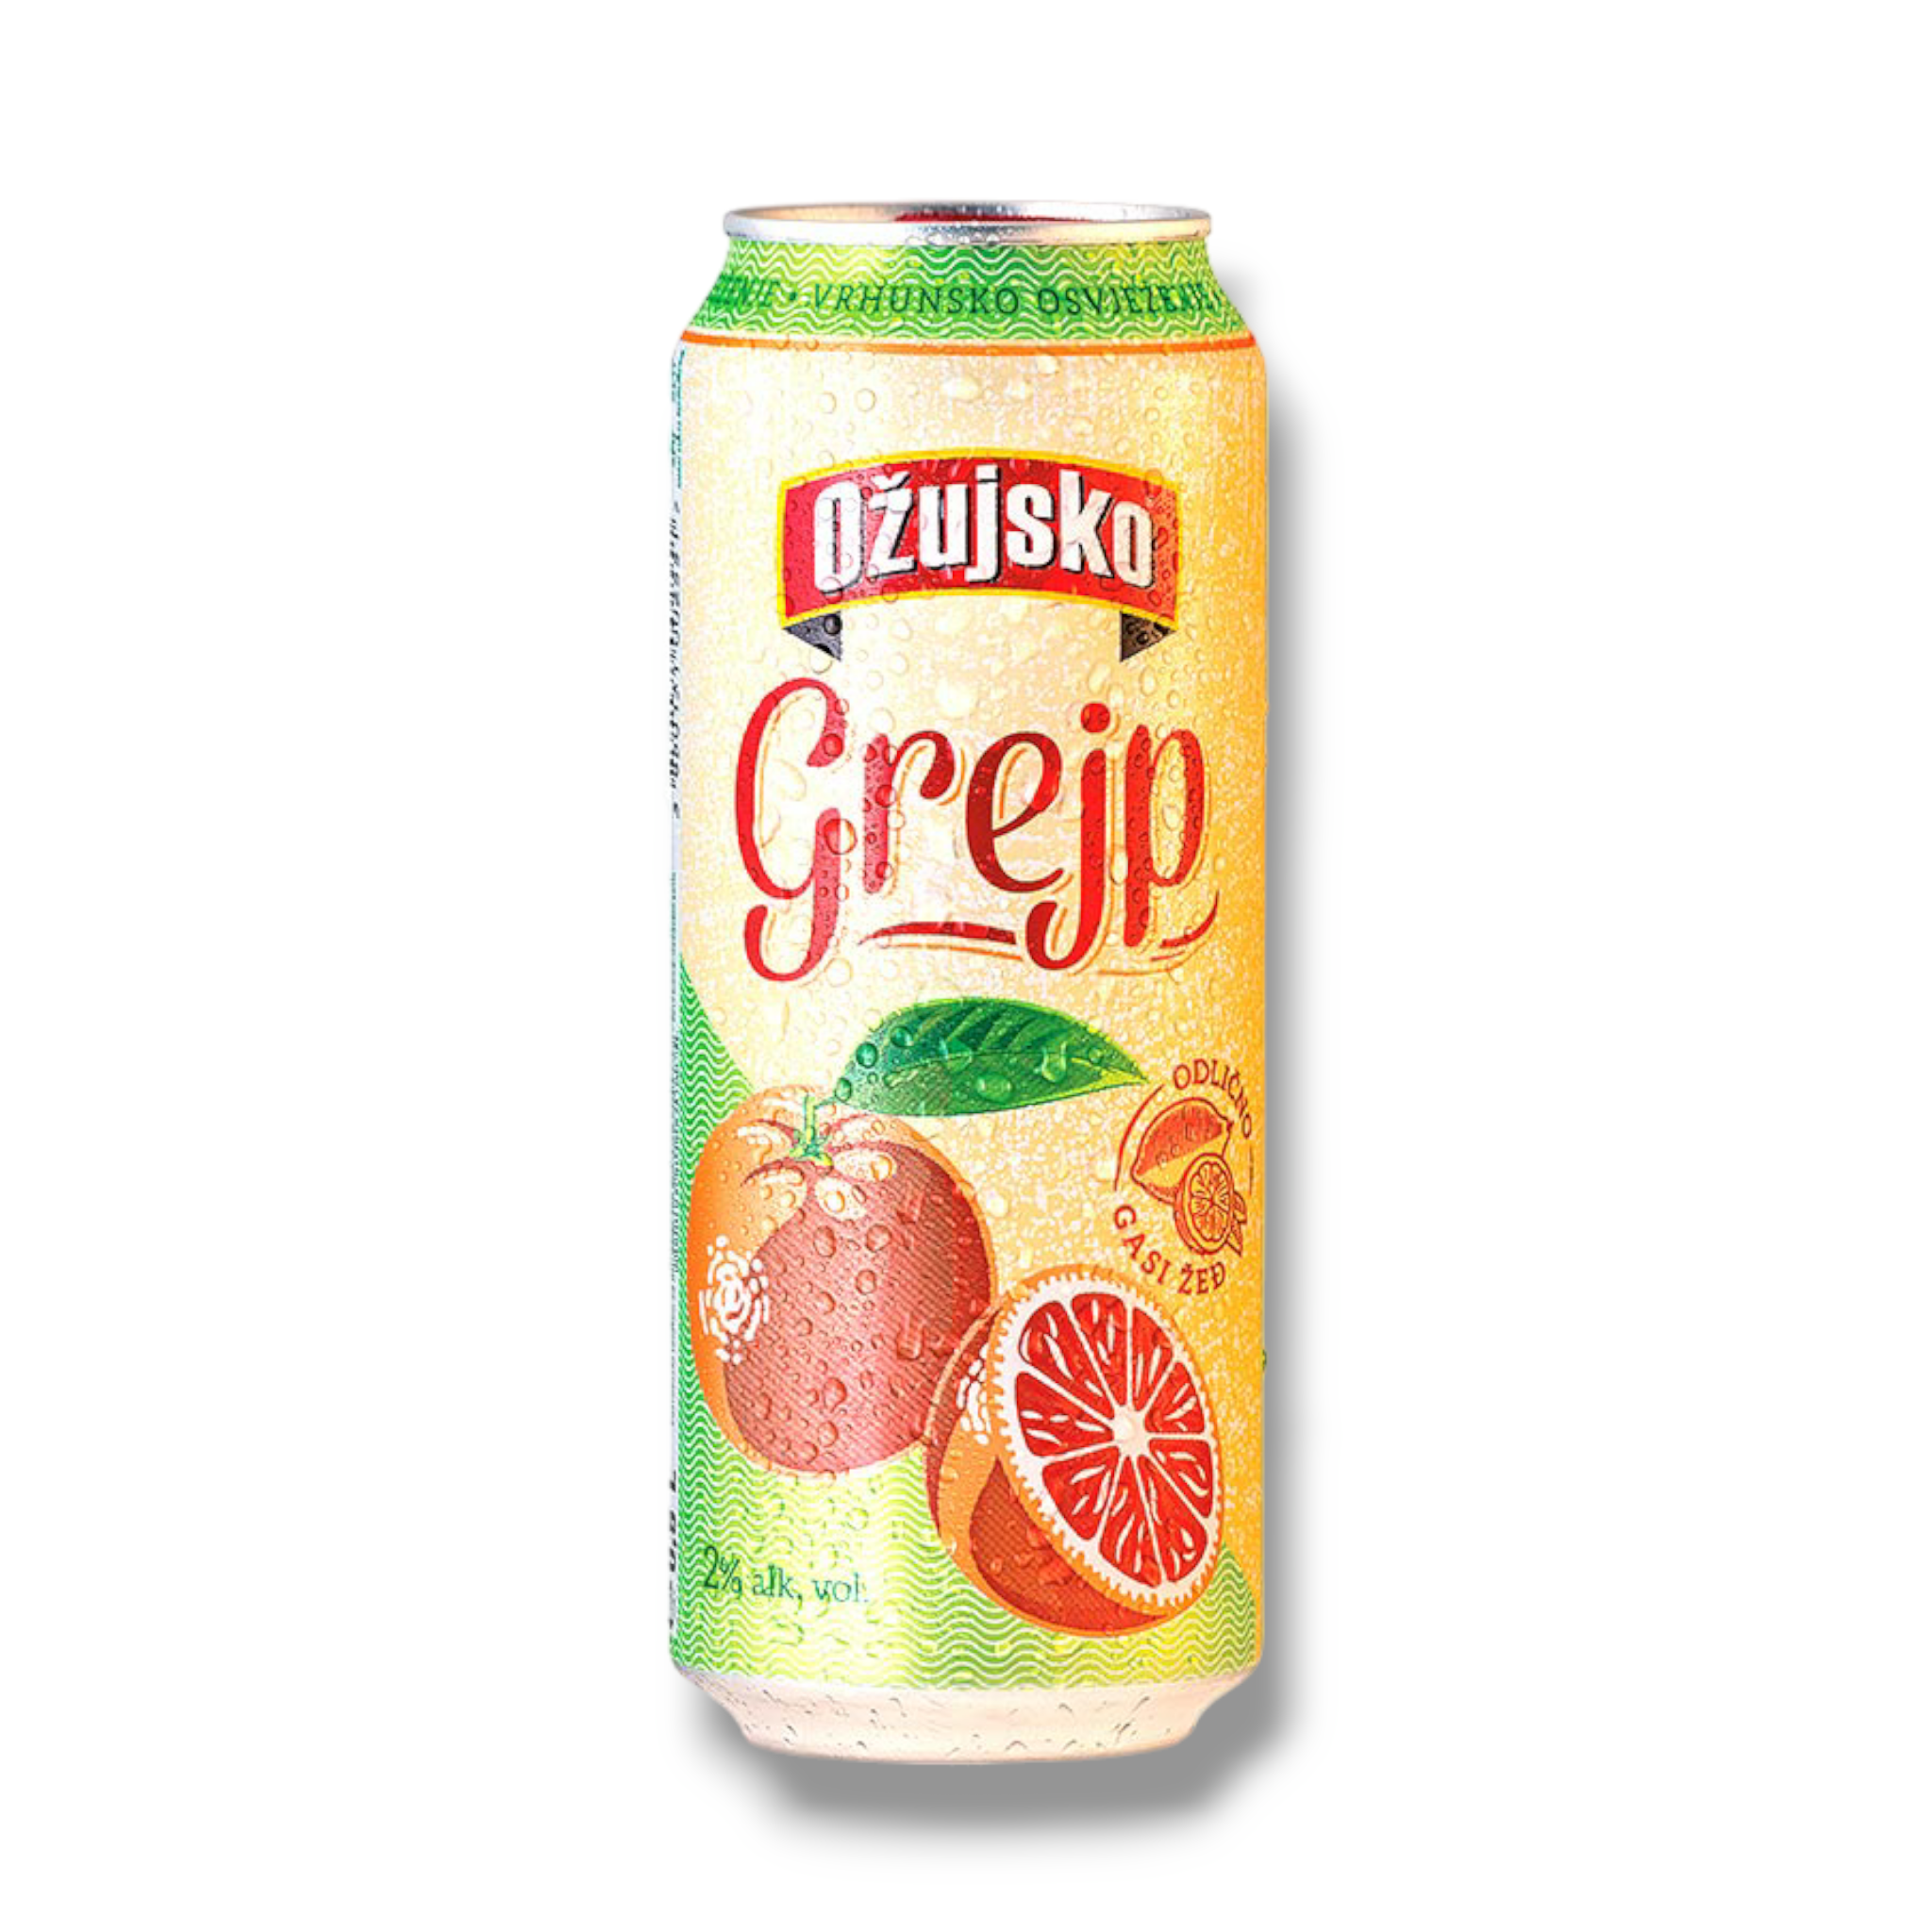 Ozujsko Grejp- Radler aus Kroatien mit Grapefruit 2,0% Vol.